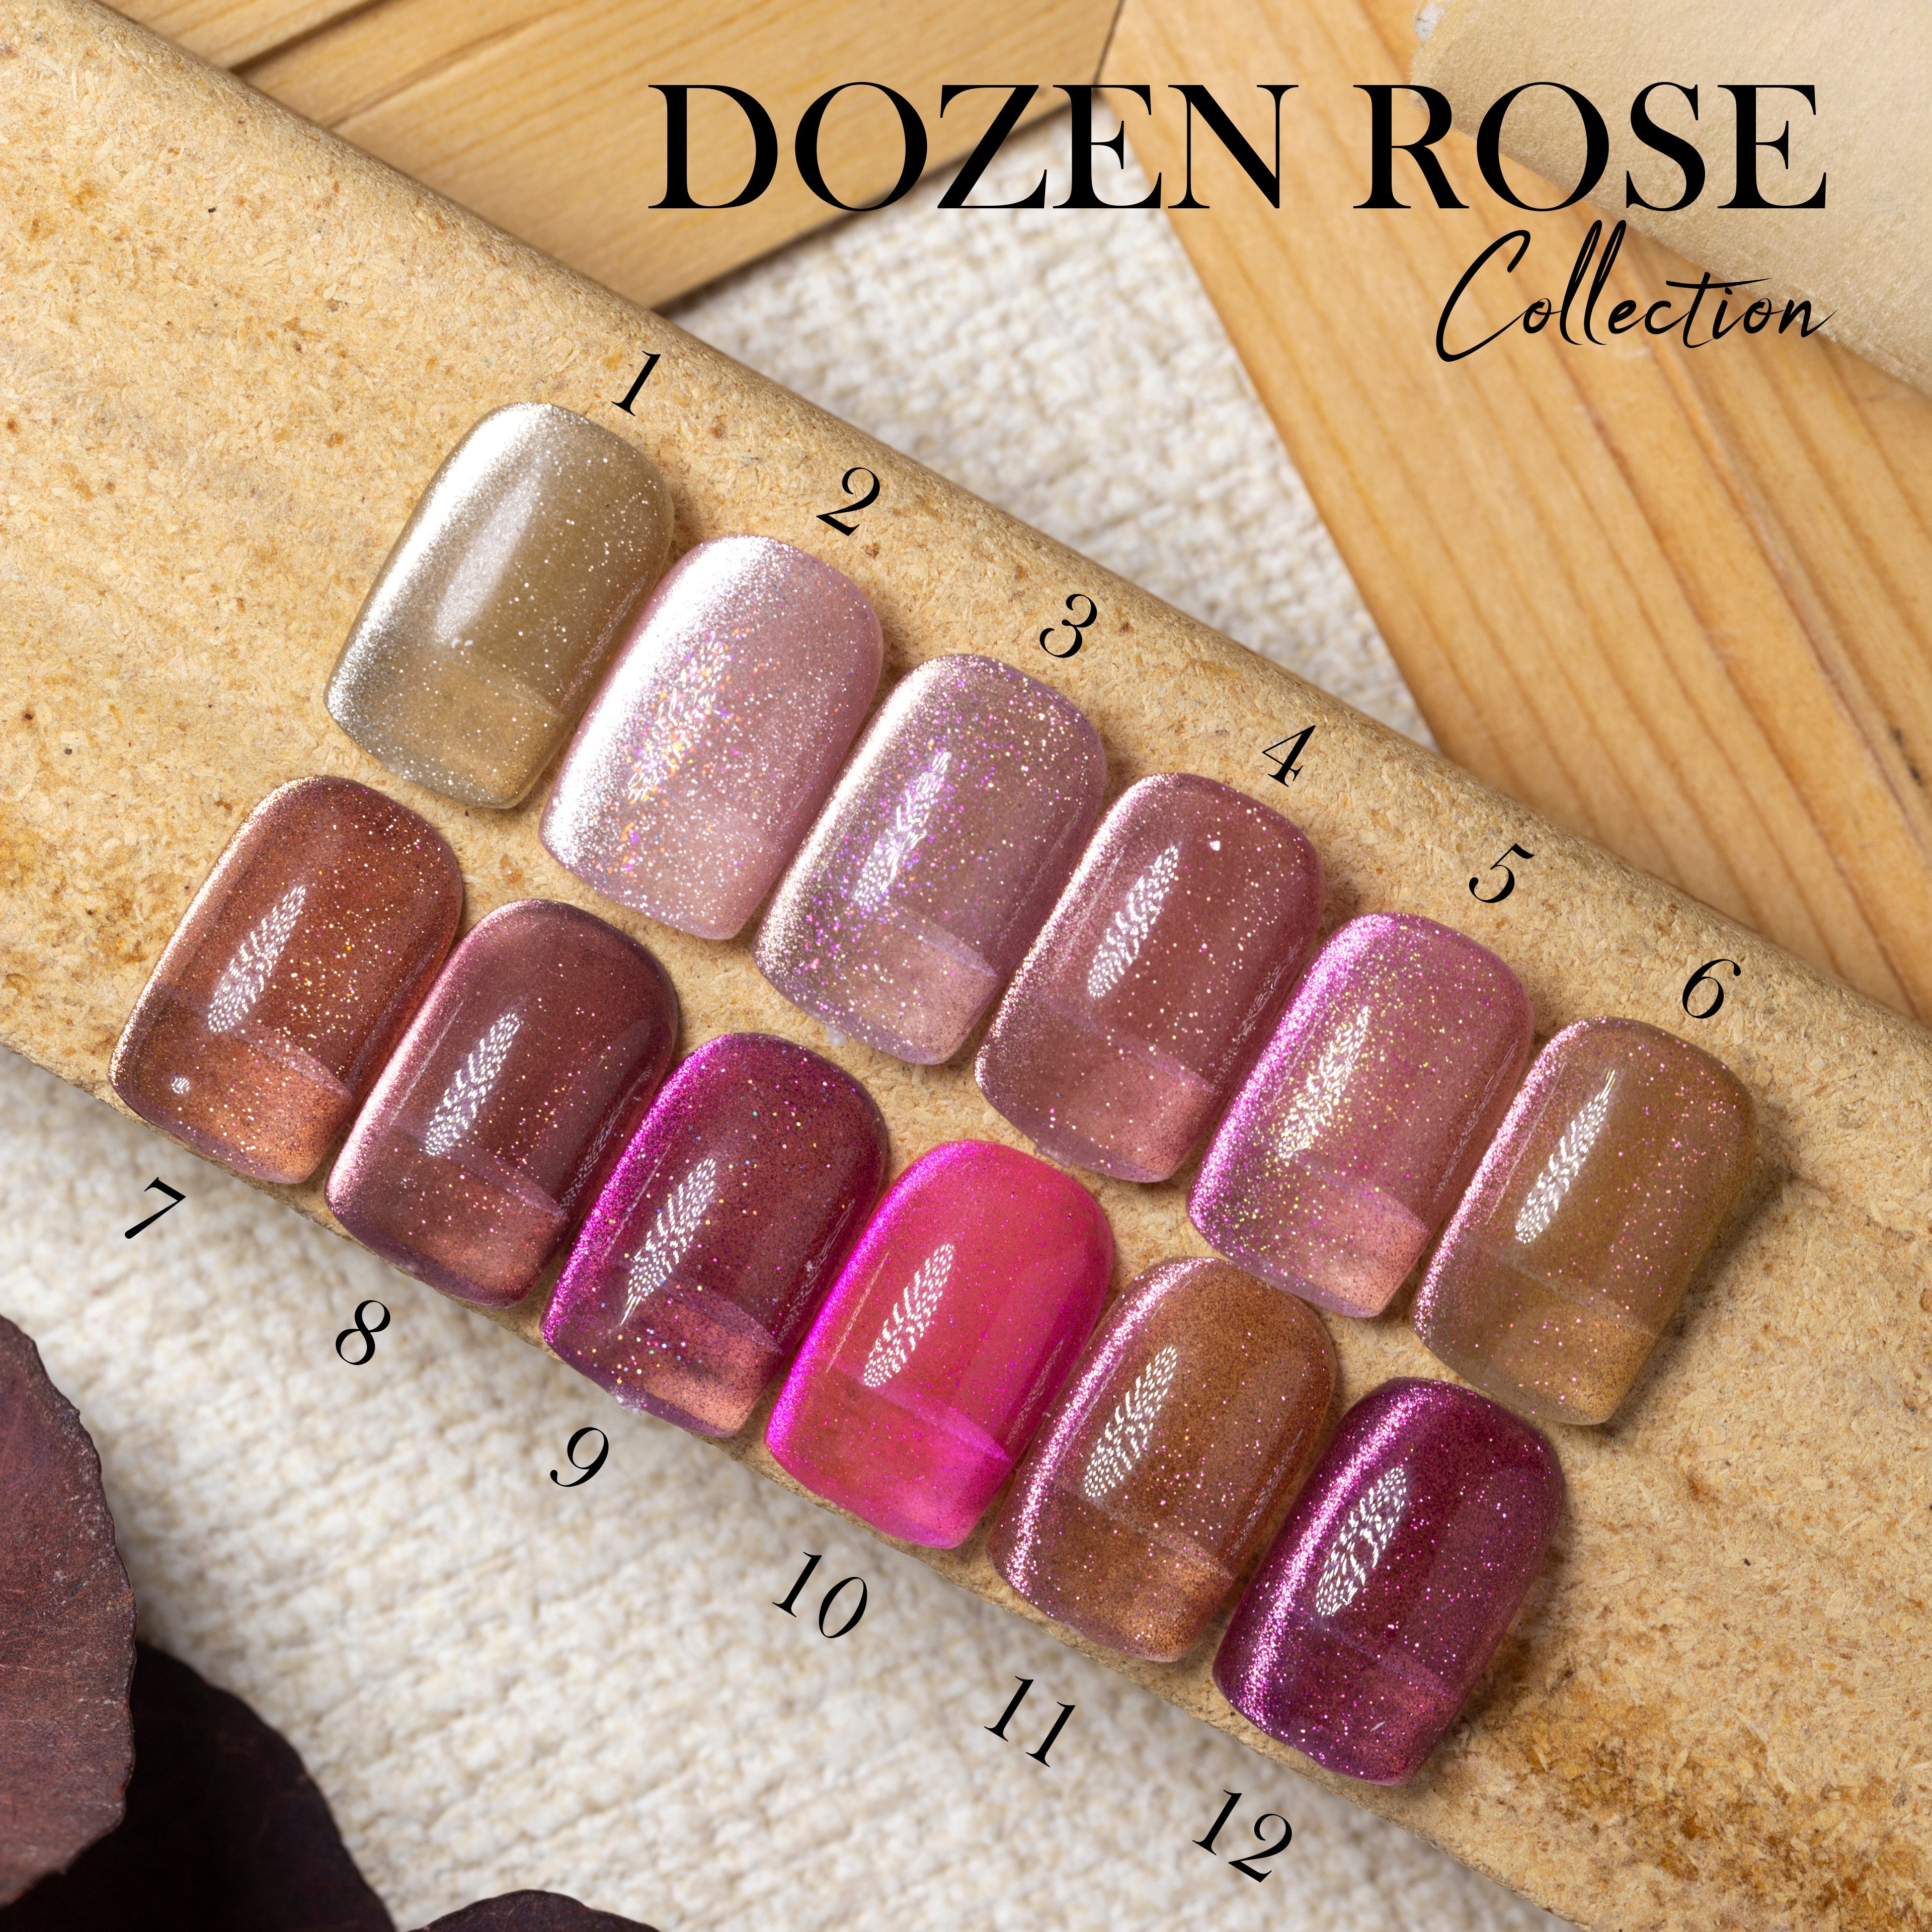 LDS DR10 - Gel Polish 0.5 oz - Dozen Rose Collection